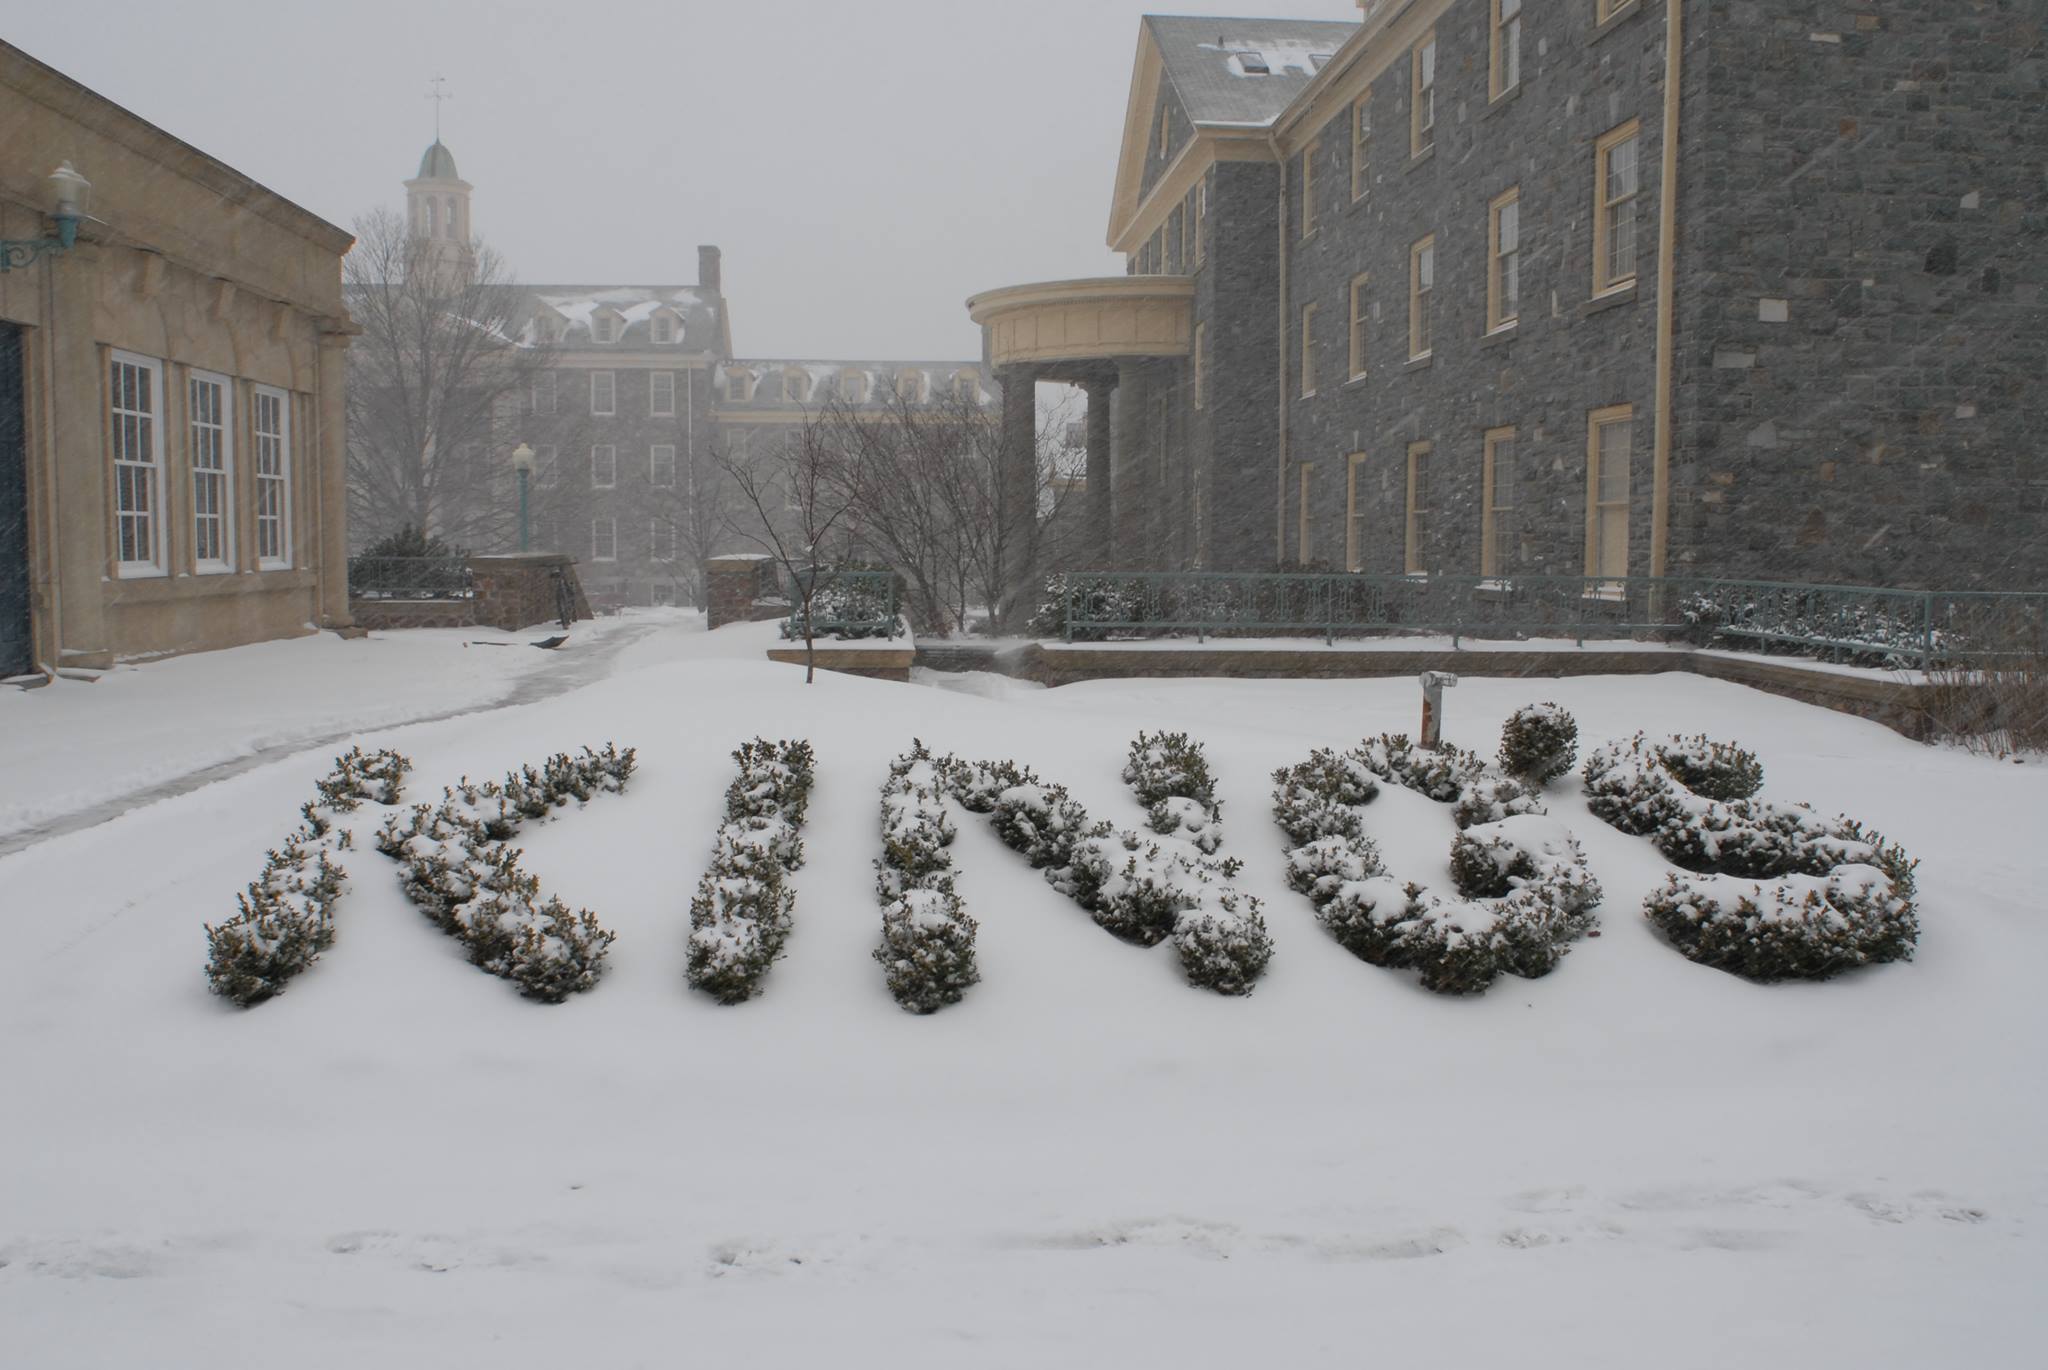 جامعة كينجز كوليدج – University of King’s College